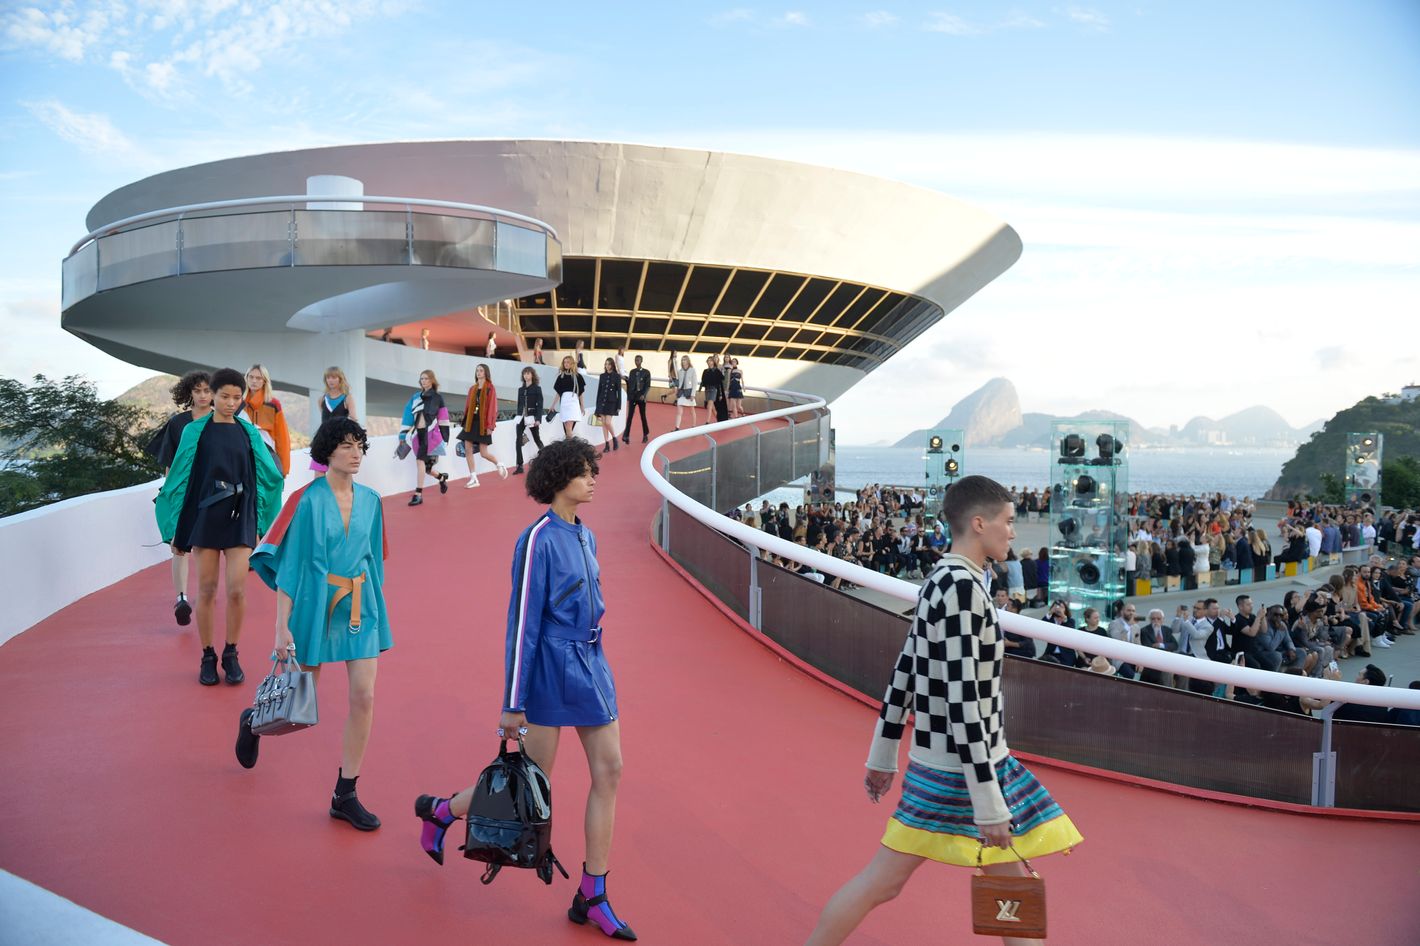 Zendaya Wears Strappy Sandals To Louis Vuitton's '17 Cruise